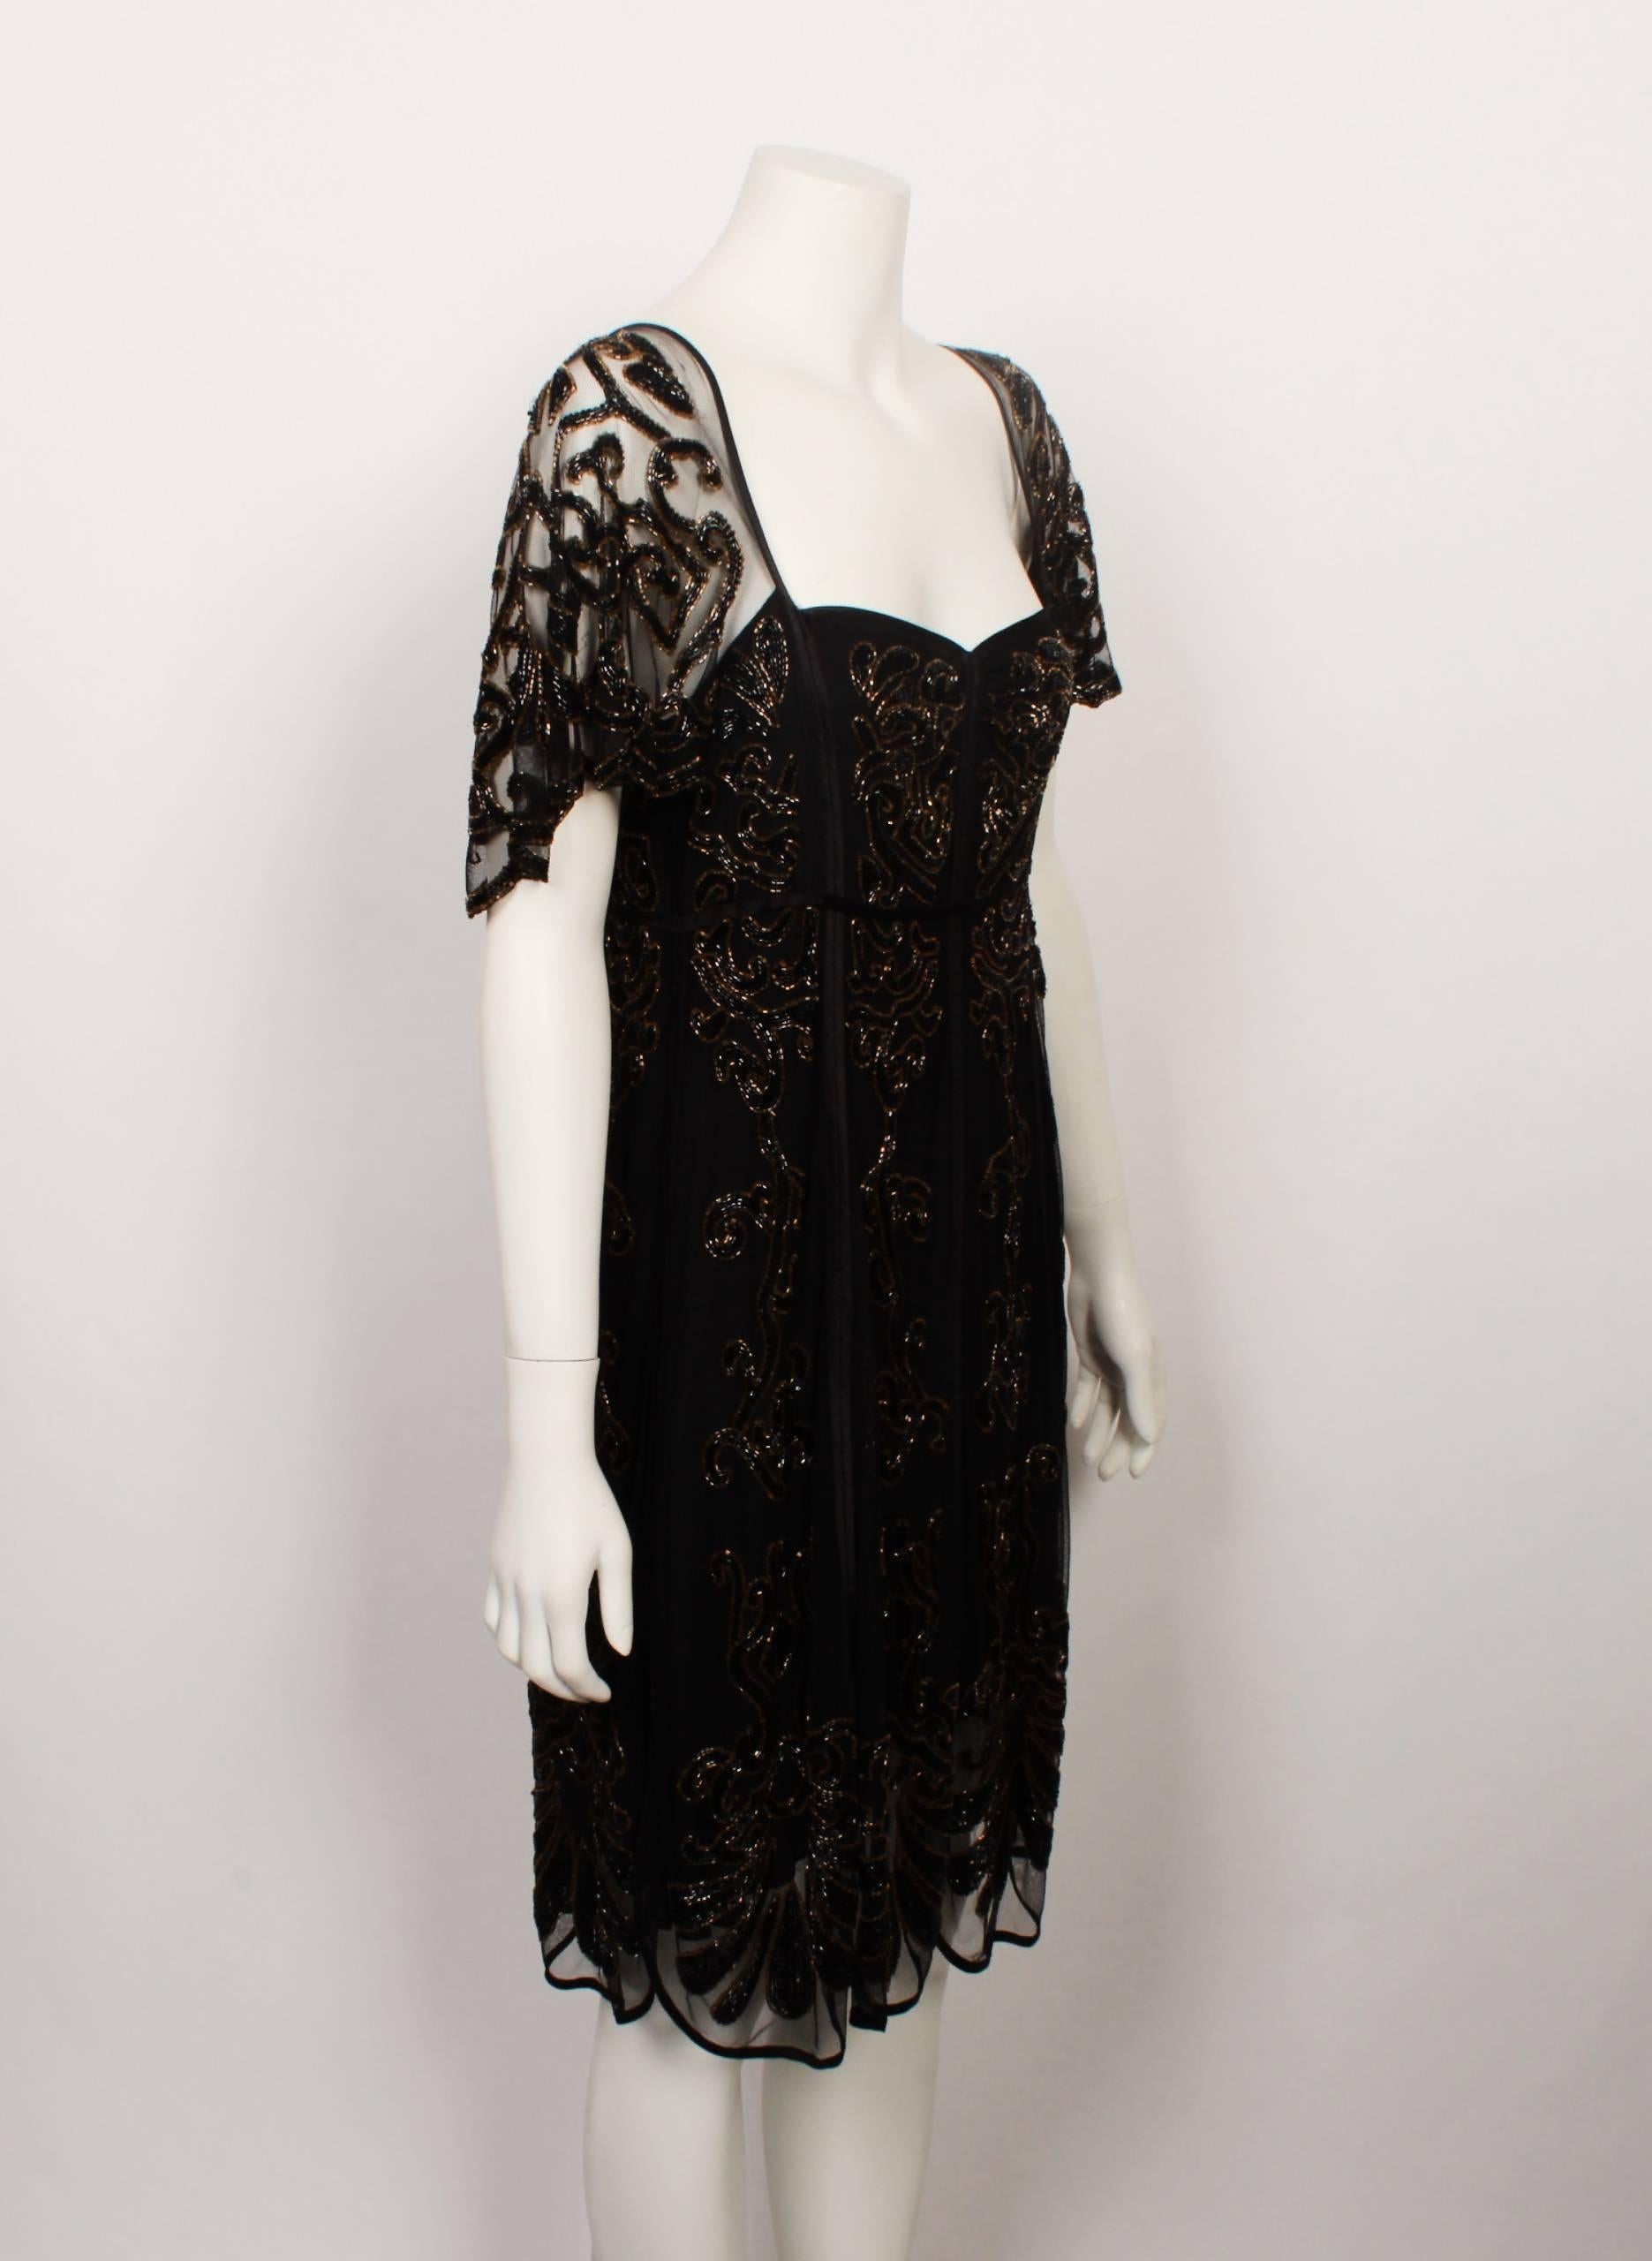 1920's style dresses